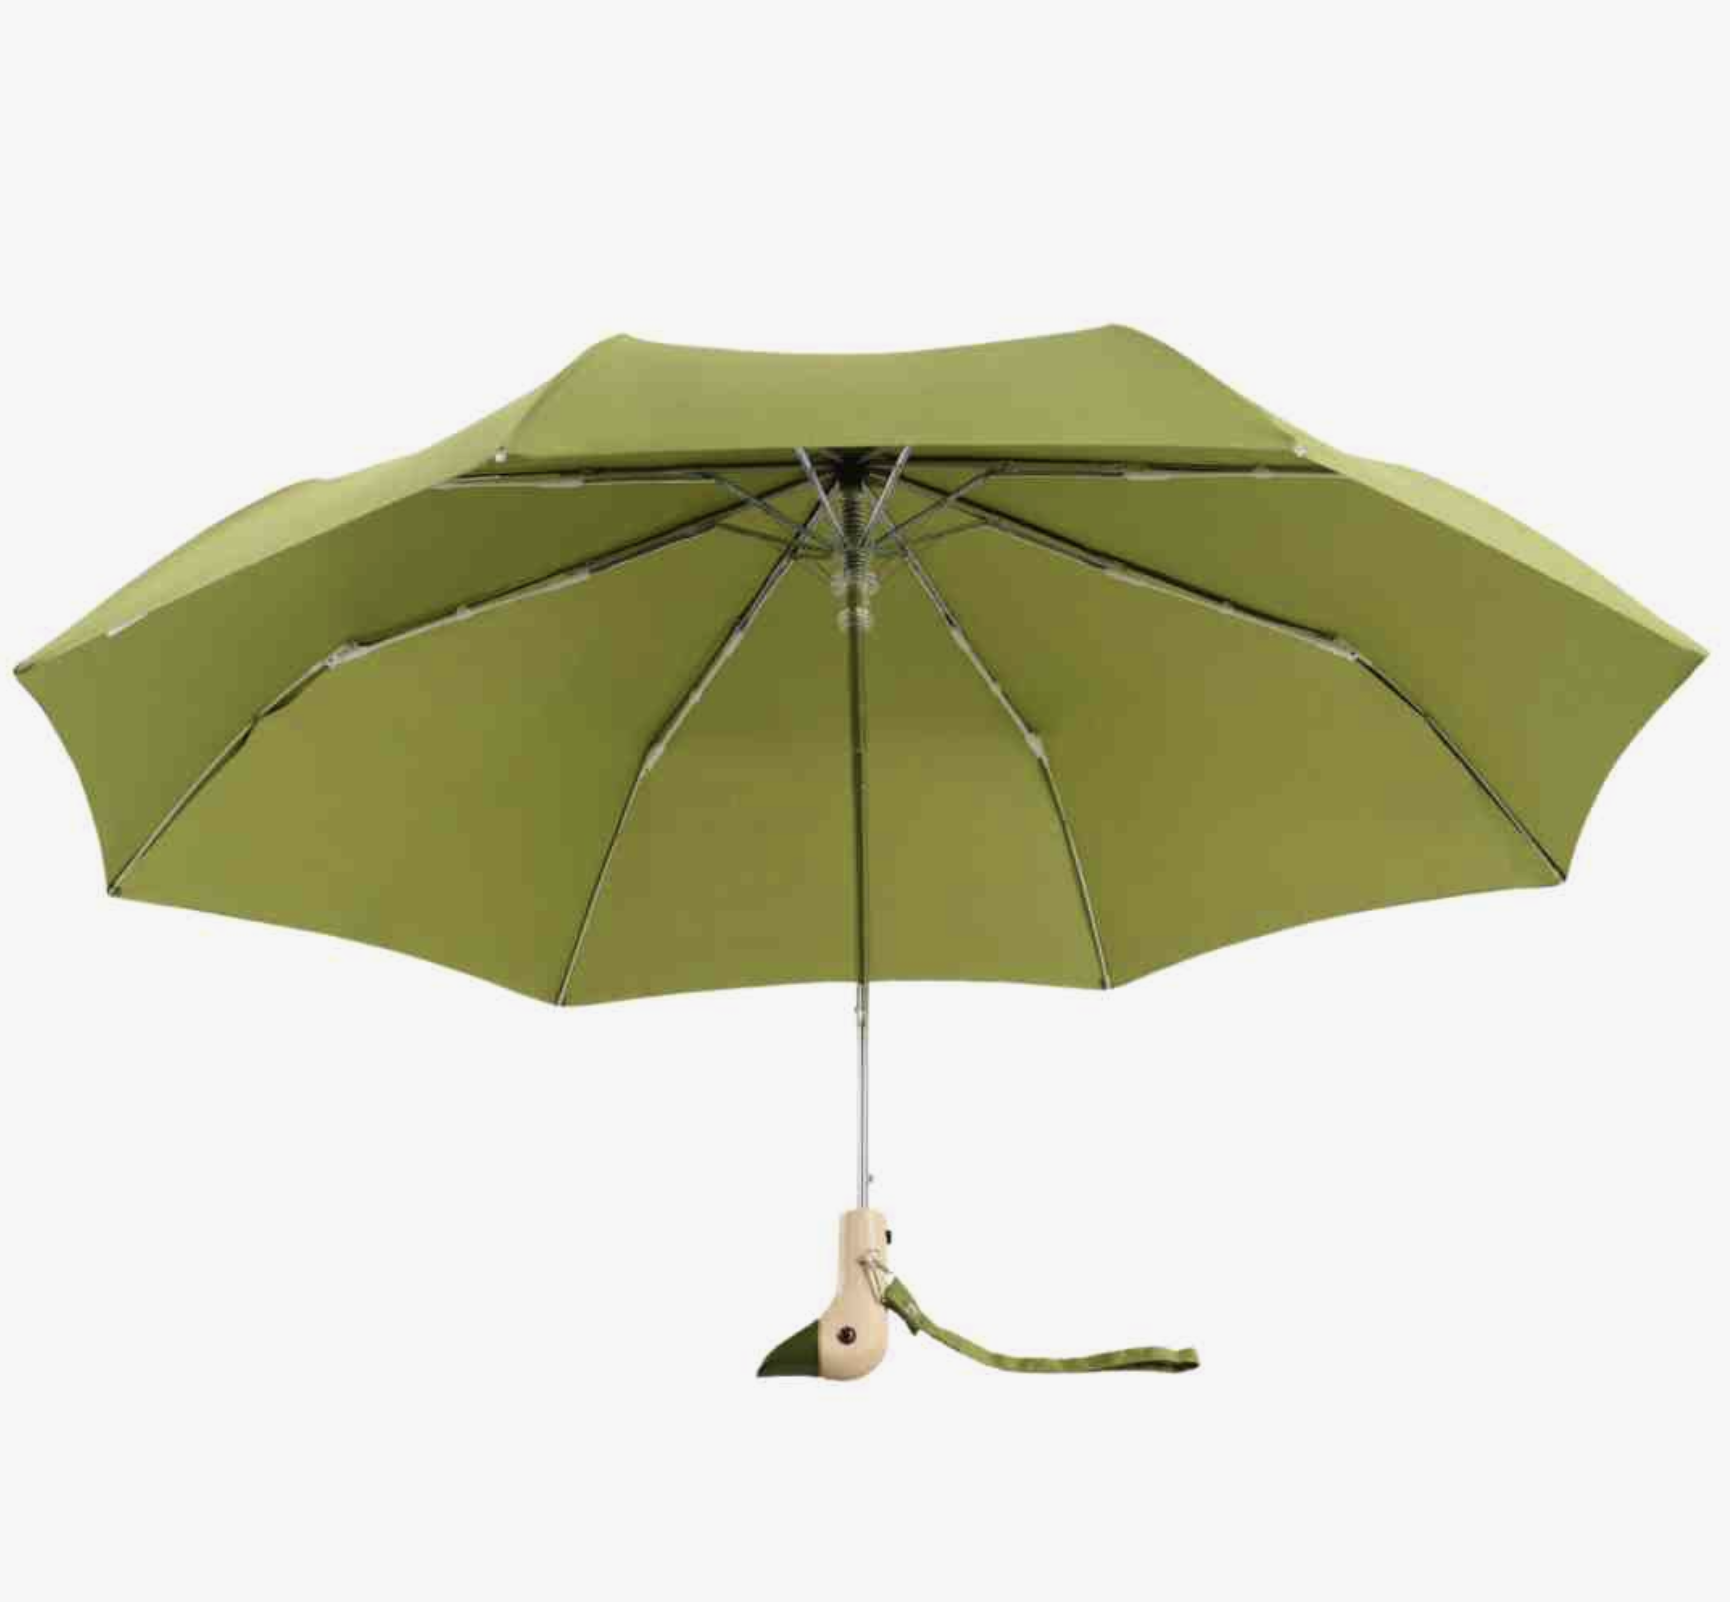 Duckhead Compact Mini Umbrella - Olive